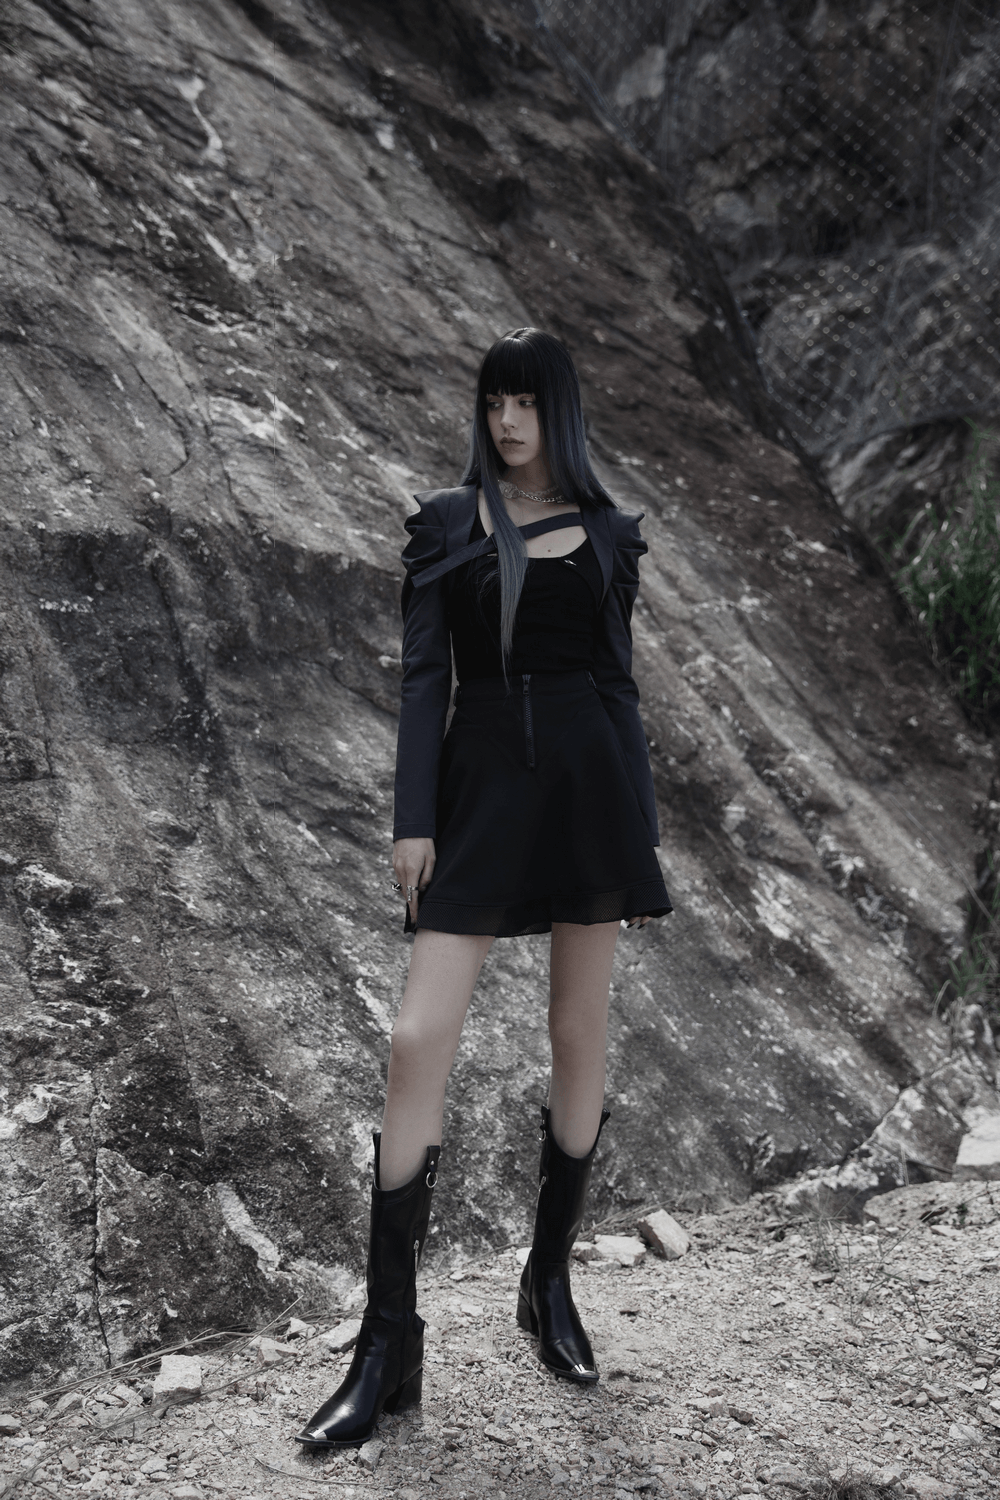 Black Plaid Mesh Mini Skirt with Futuristic Flair